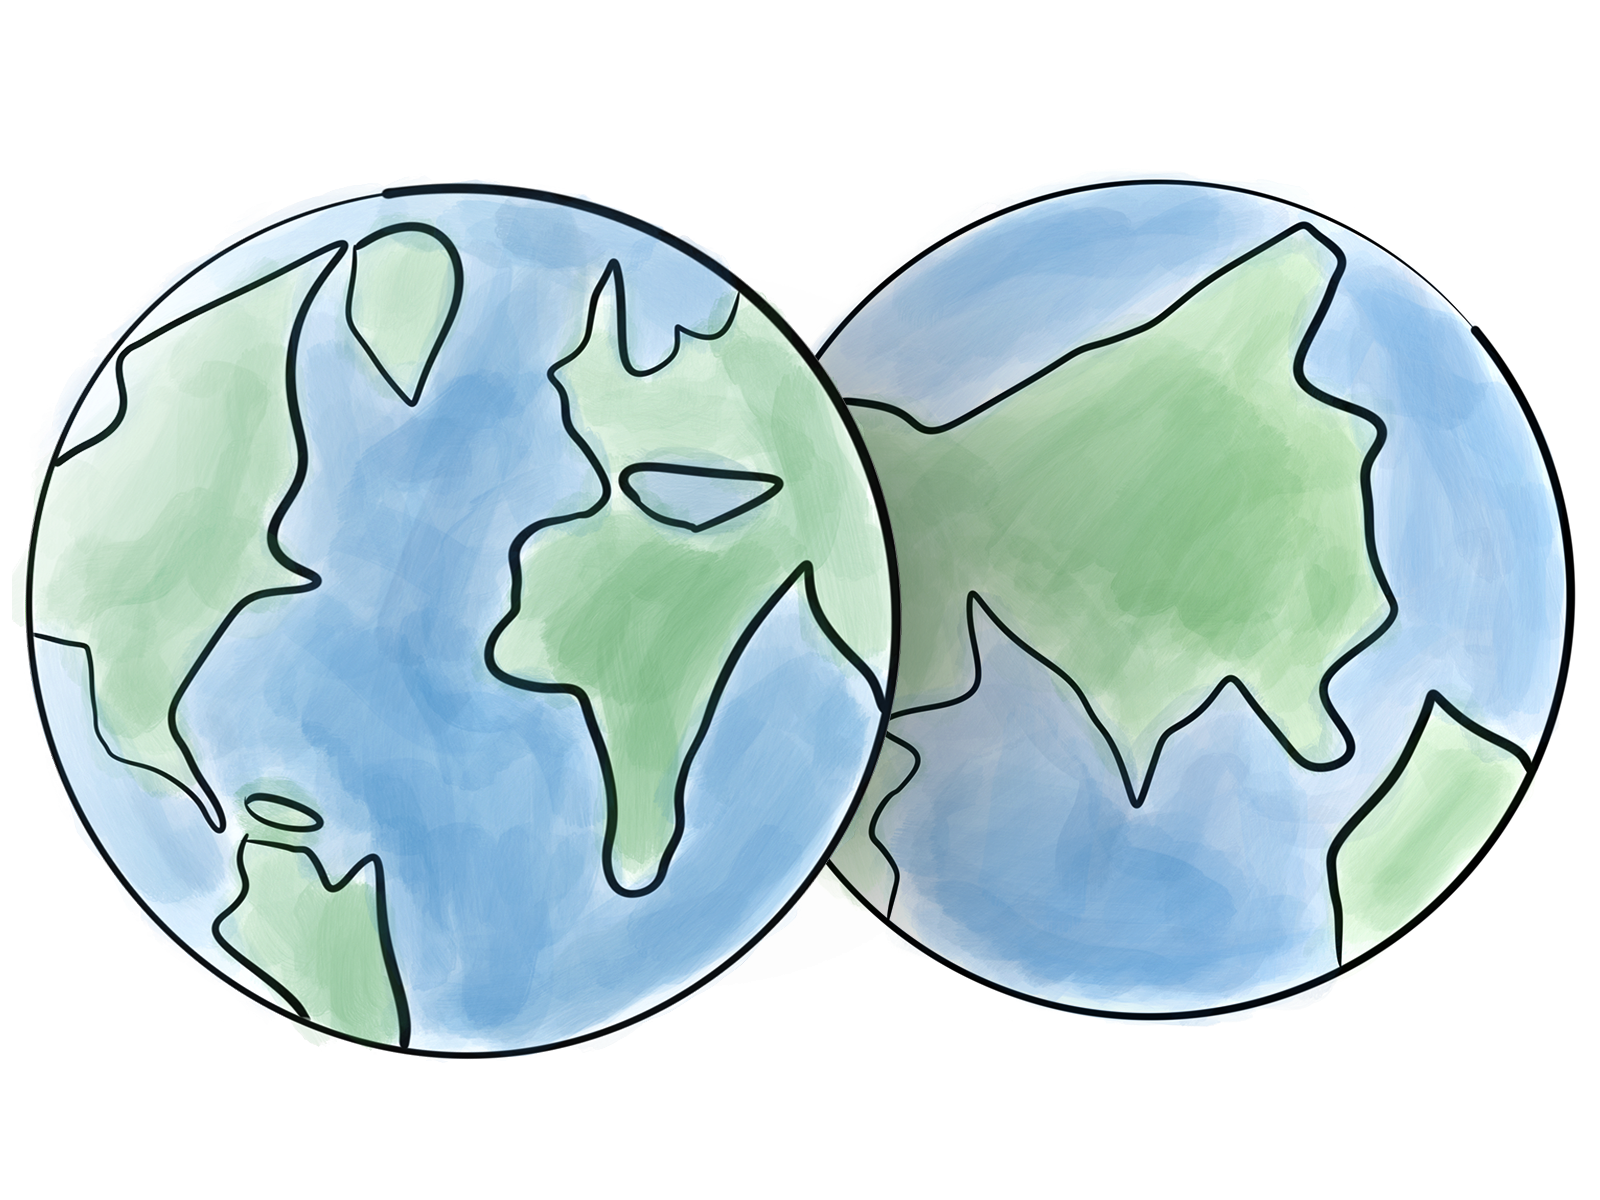 Sketch Globe World Map Black Vector Illustration Stock Illustrations –  1,741 Sketch Globe World Map Black Vector Illustration Stock Illustrations,  Vectors & Clipart - Dreamstime